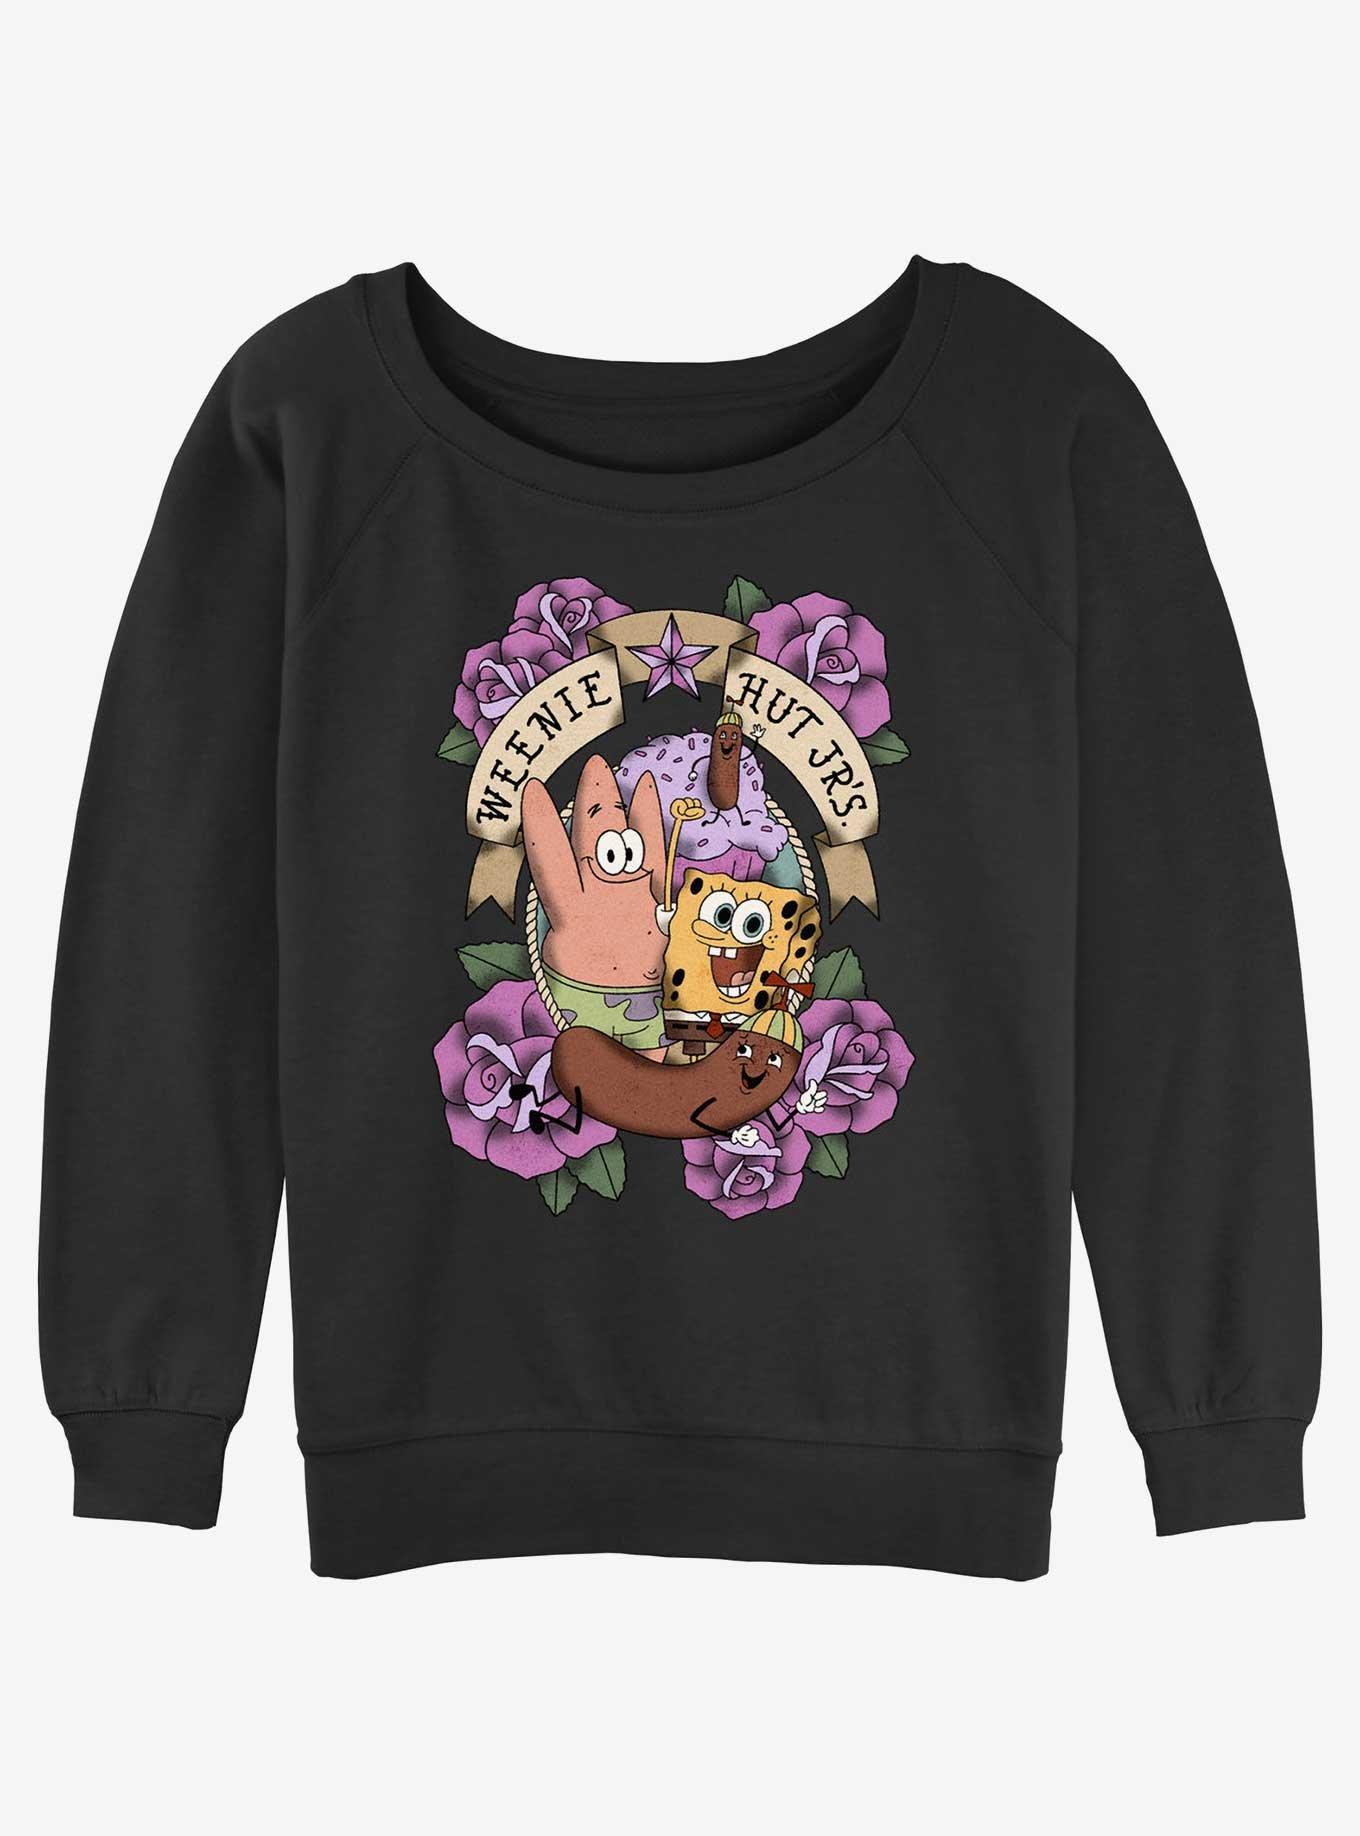 Spongebob Squarepants Weenie Hut Jr's Girls Slouchy Sweatshirt